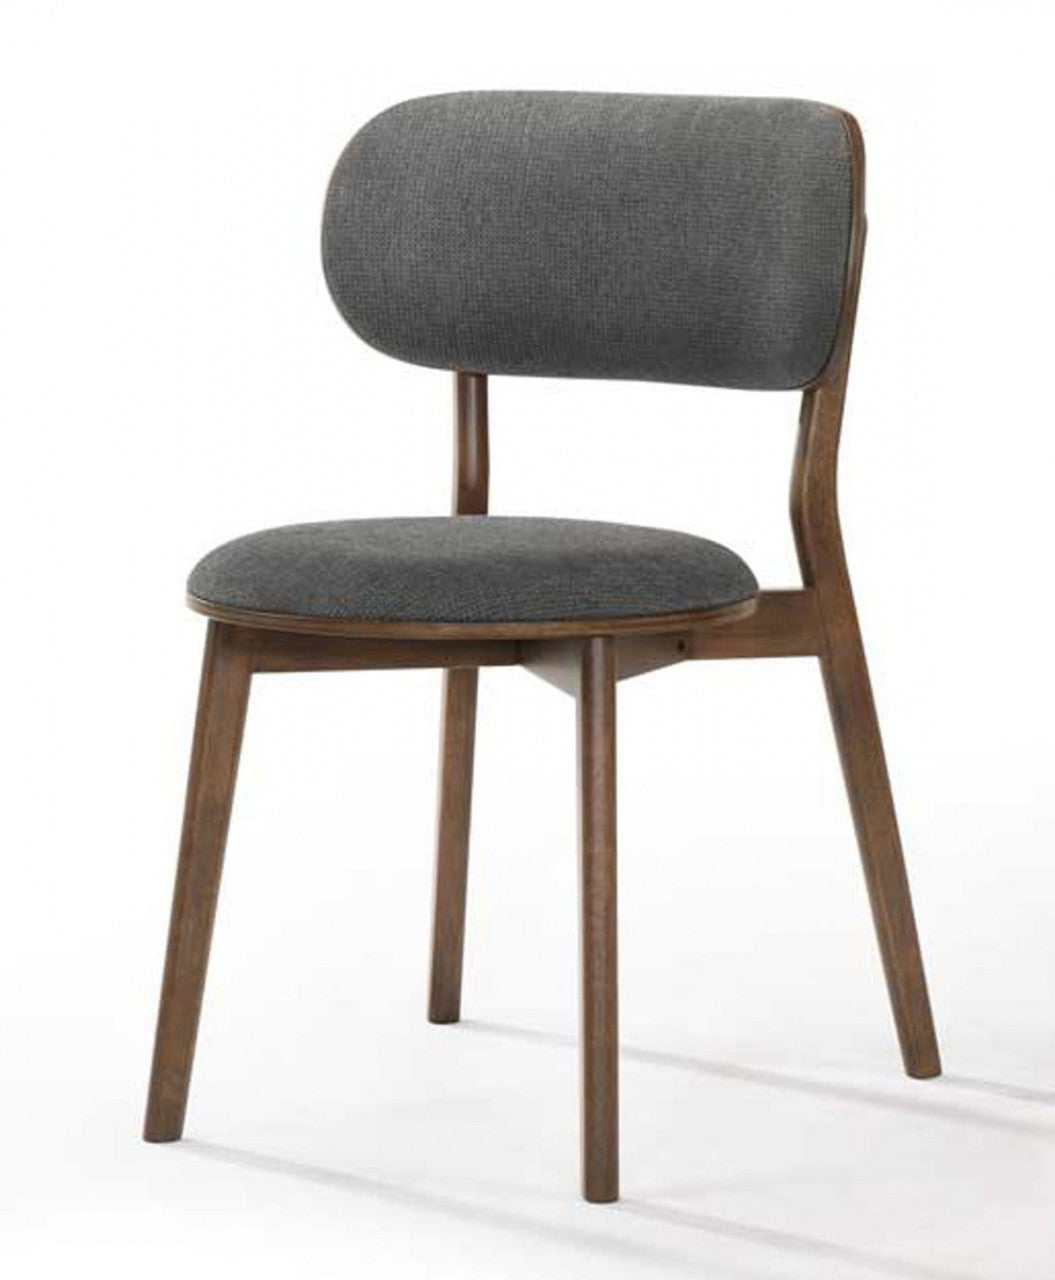 Modrest Donald Modern Dark Grey & Walnut Dining Chair (Set of 2)